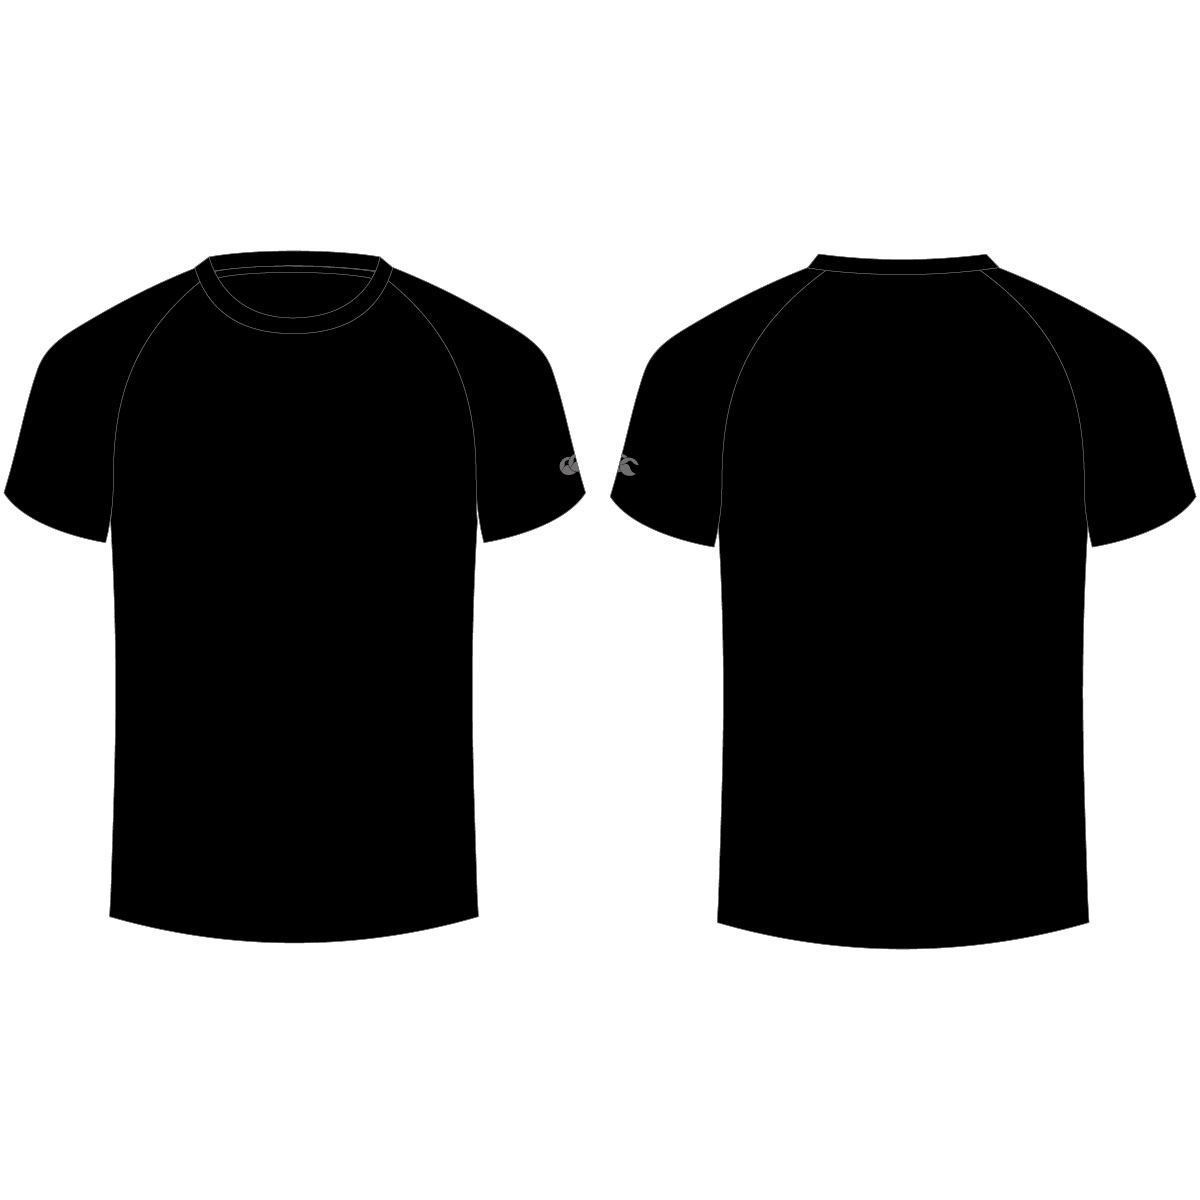 Pix For > Plain T Shirt Model Back Clipart - Free to use Clip Art ...